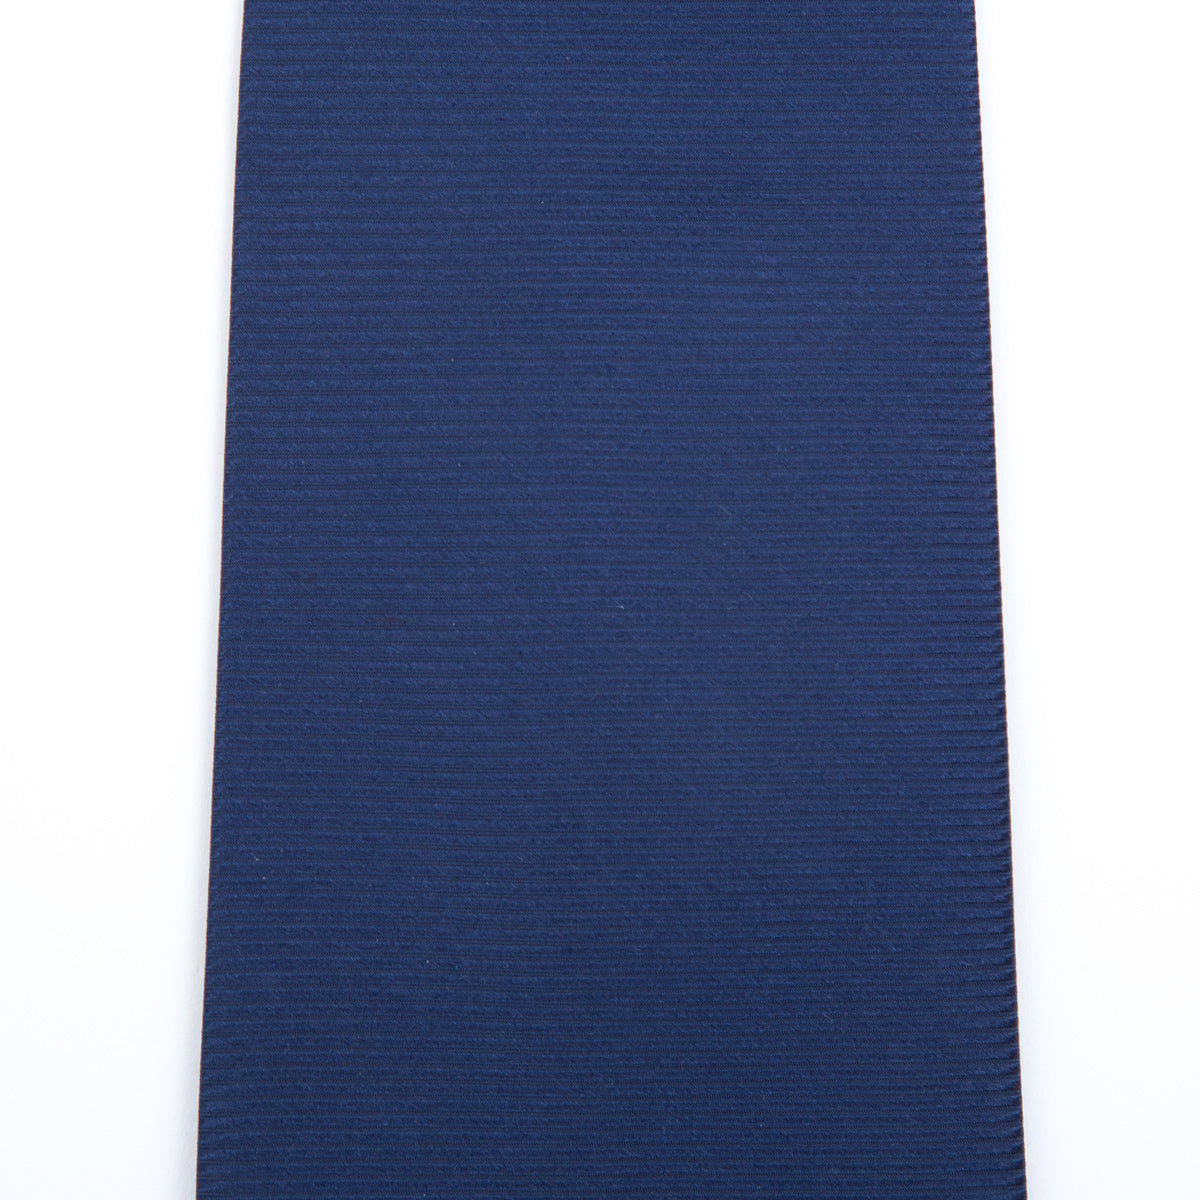 Admiral blue plain tie